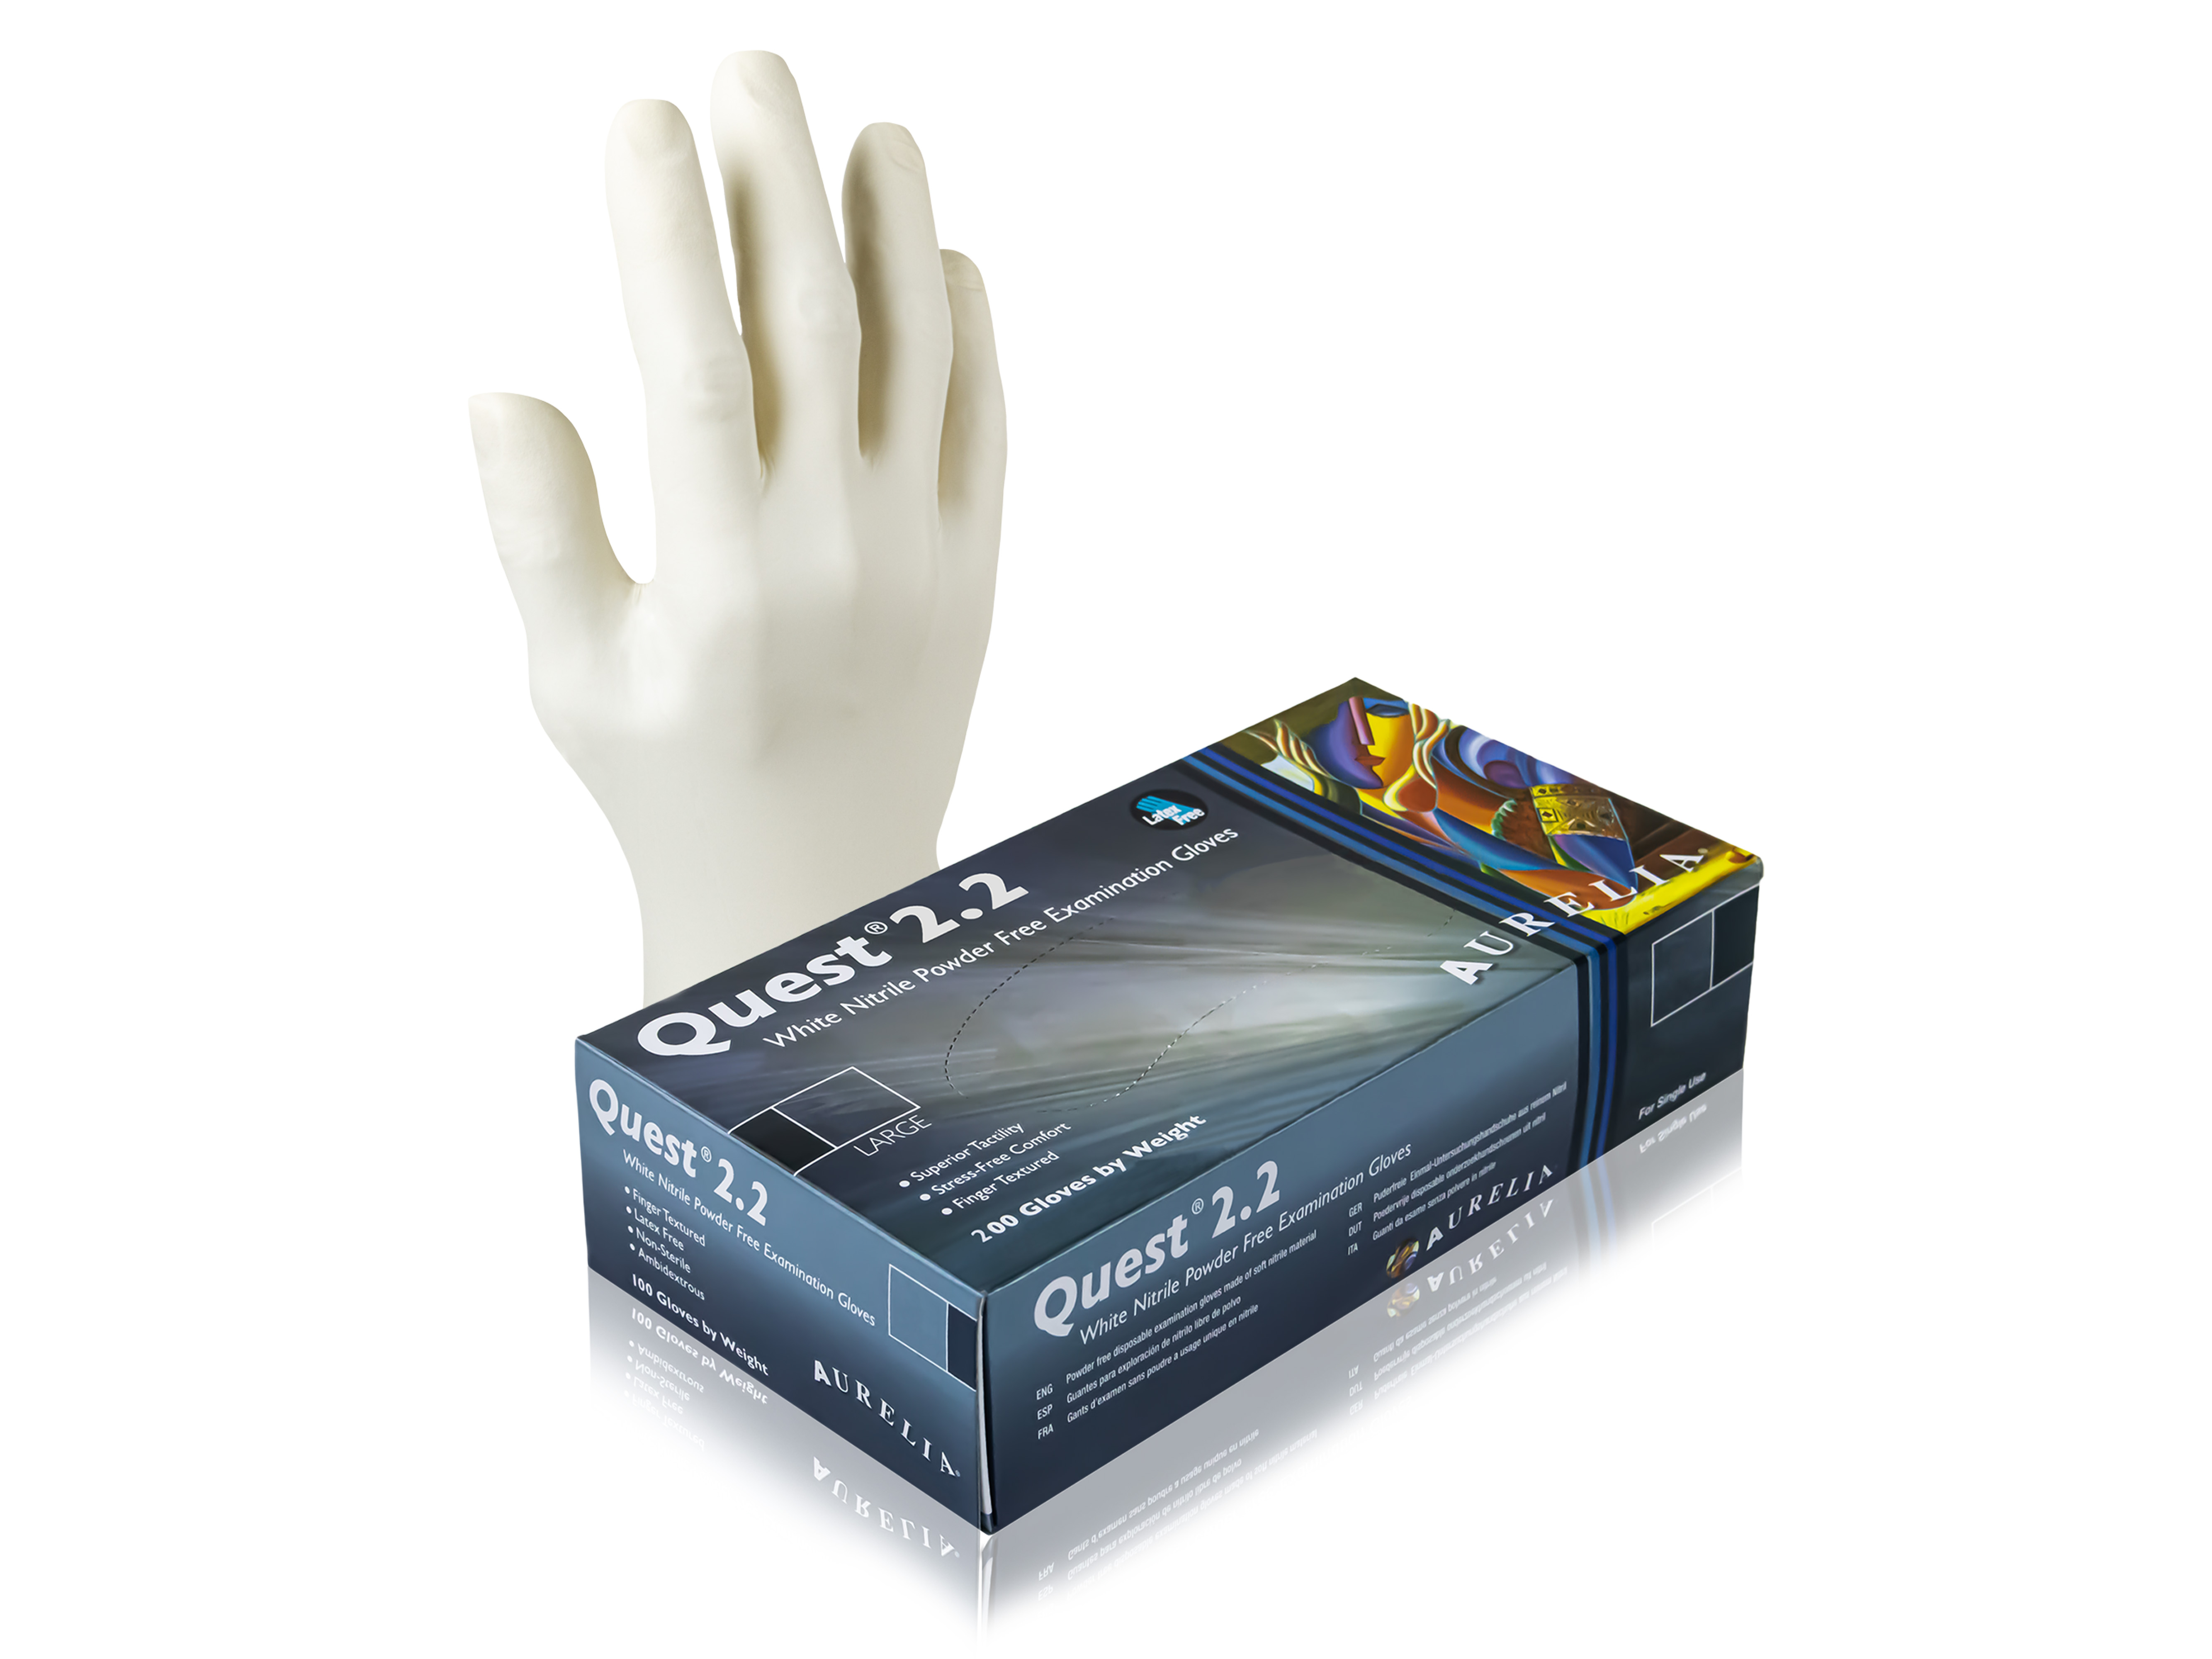 Aurelia Quest 2.2 Glove Box 2